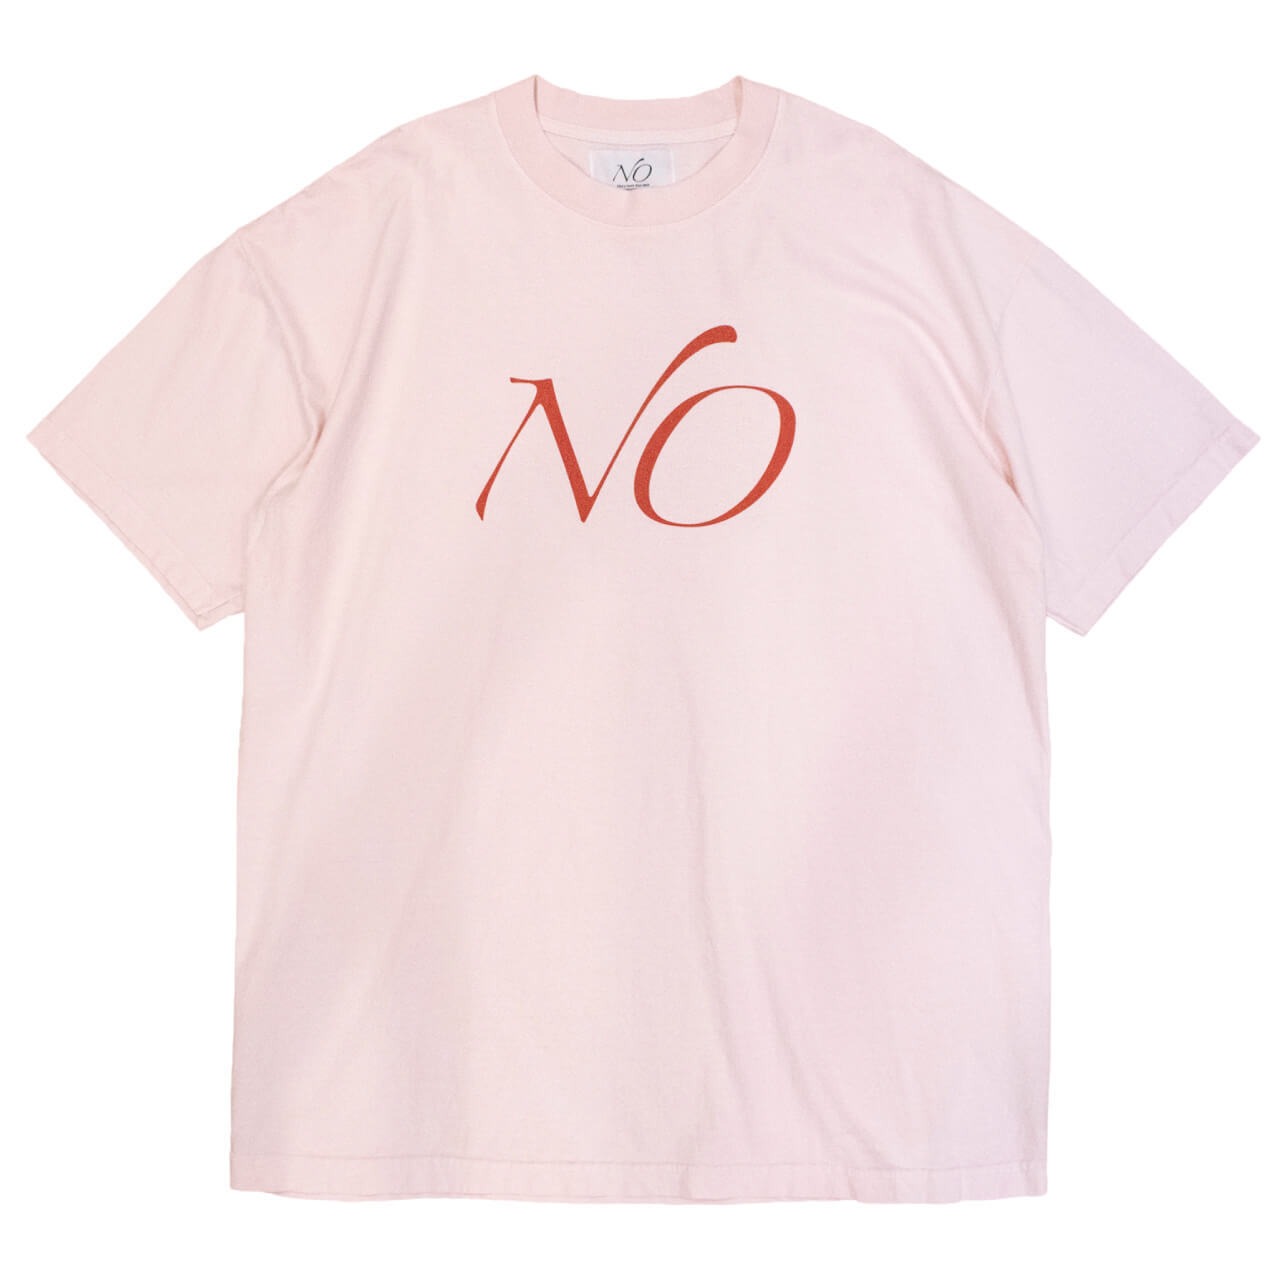 NO Logo Tee shirts - Light Pink